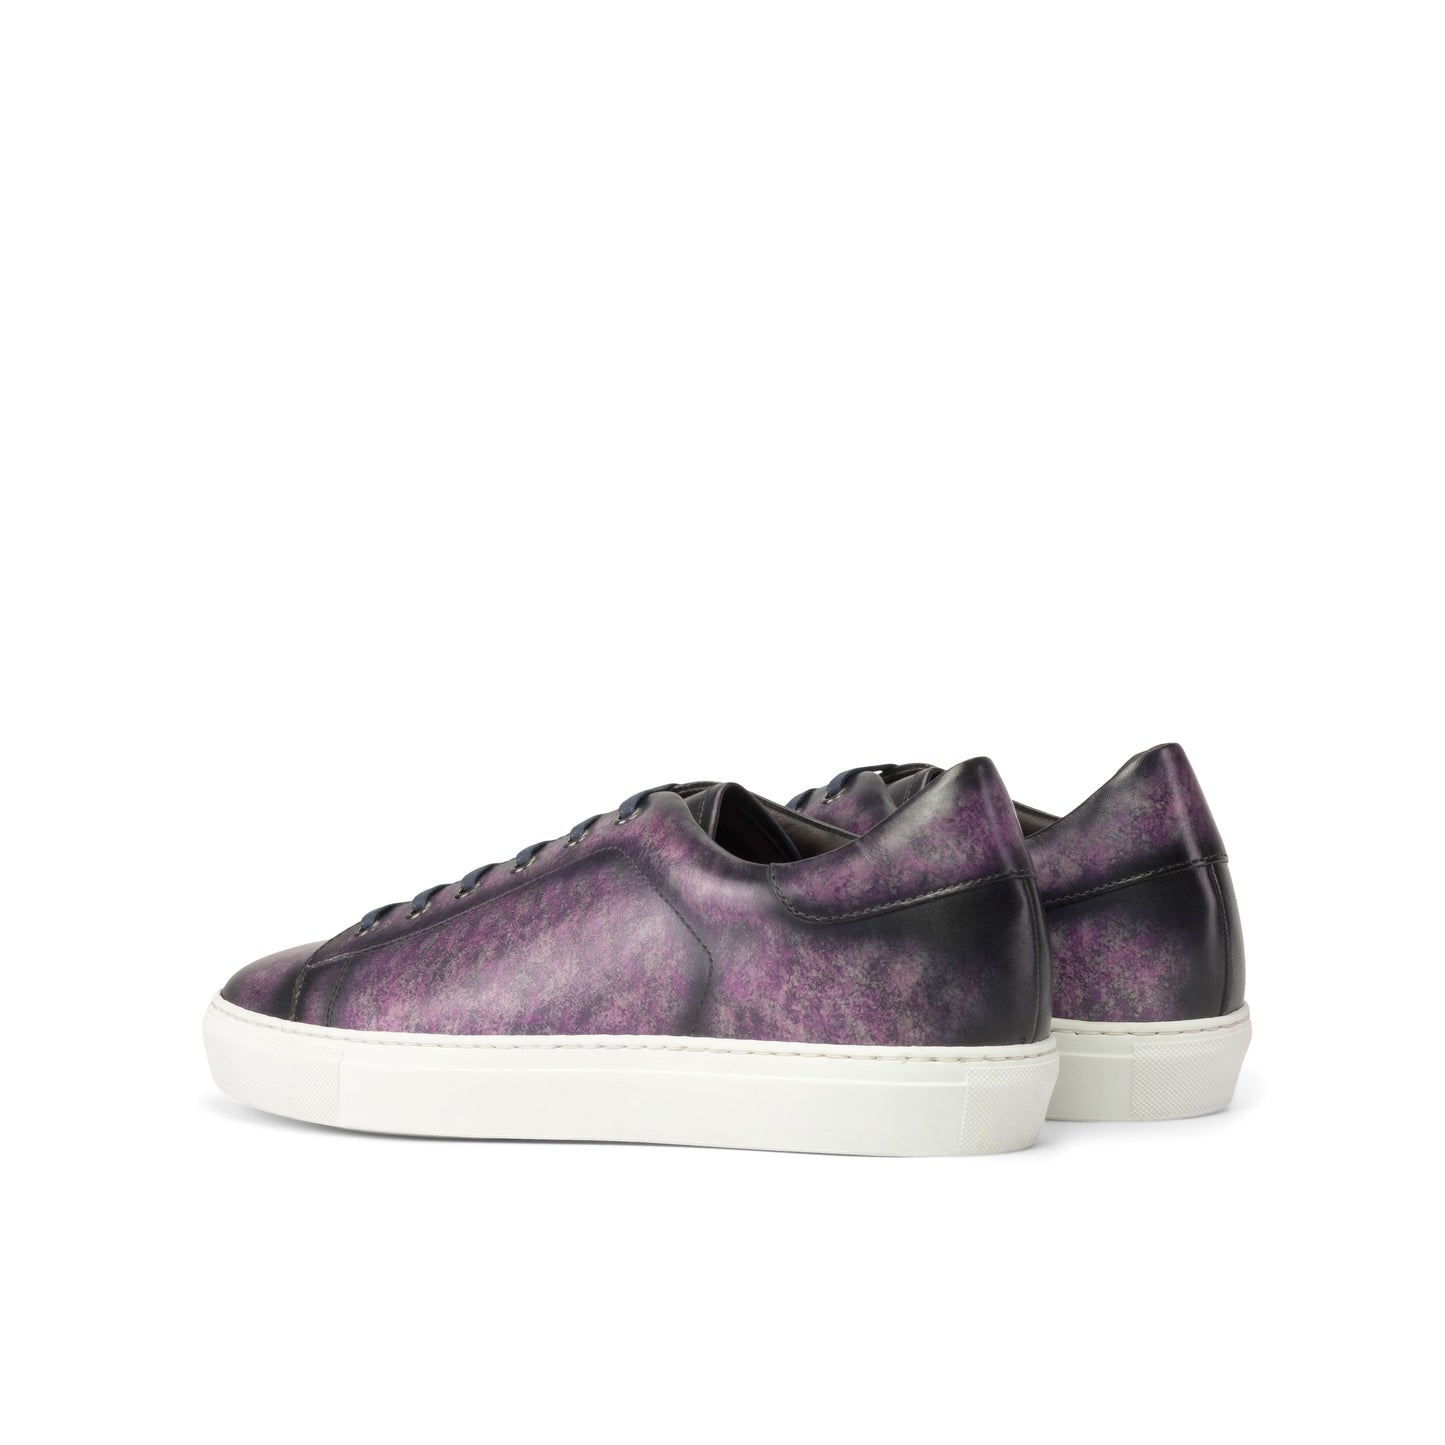 Sneakers purple patina